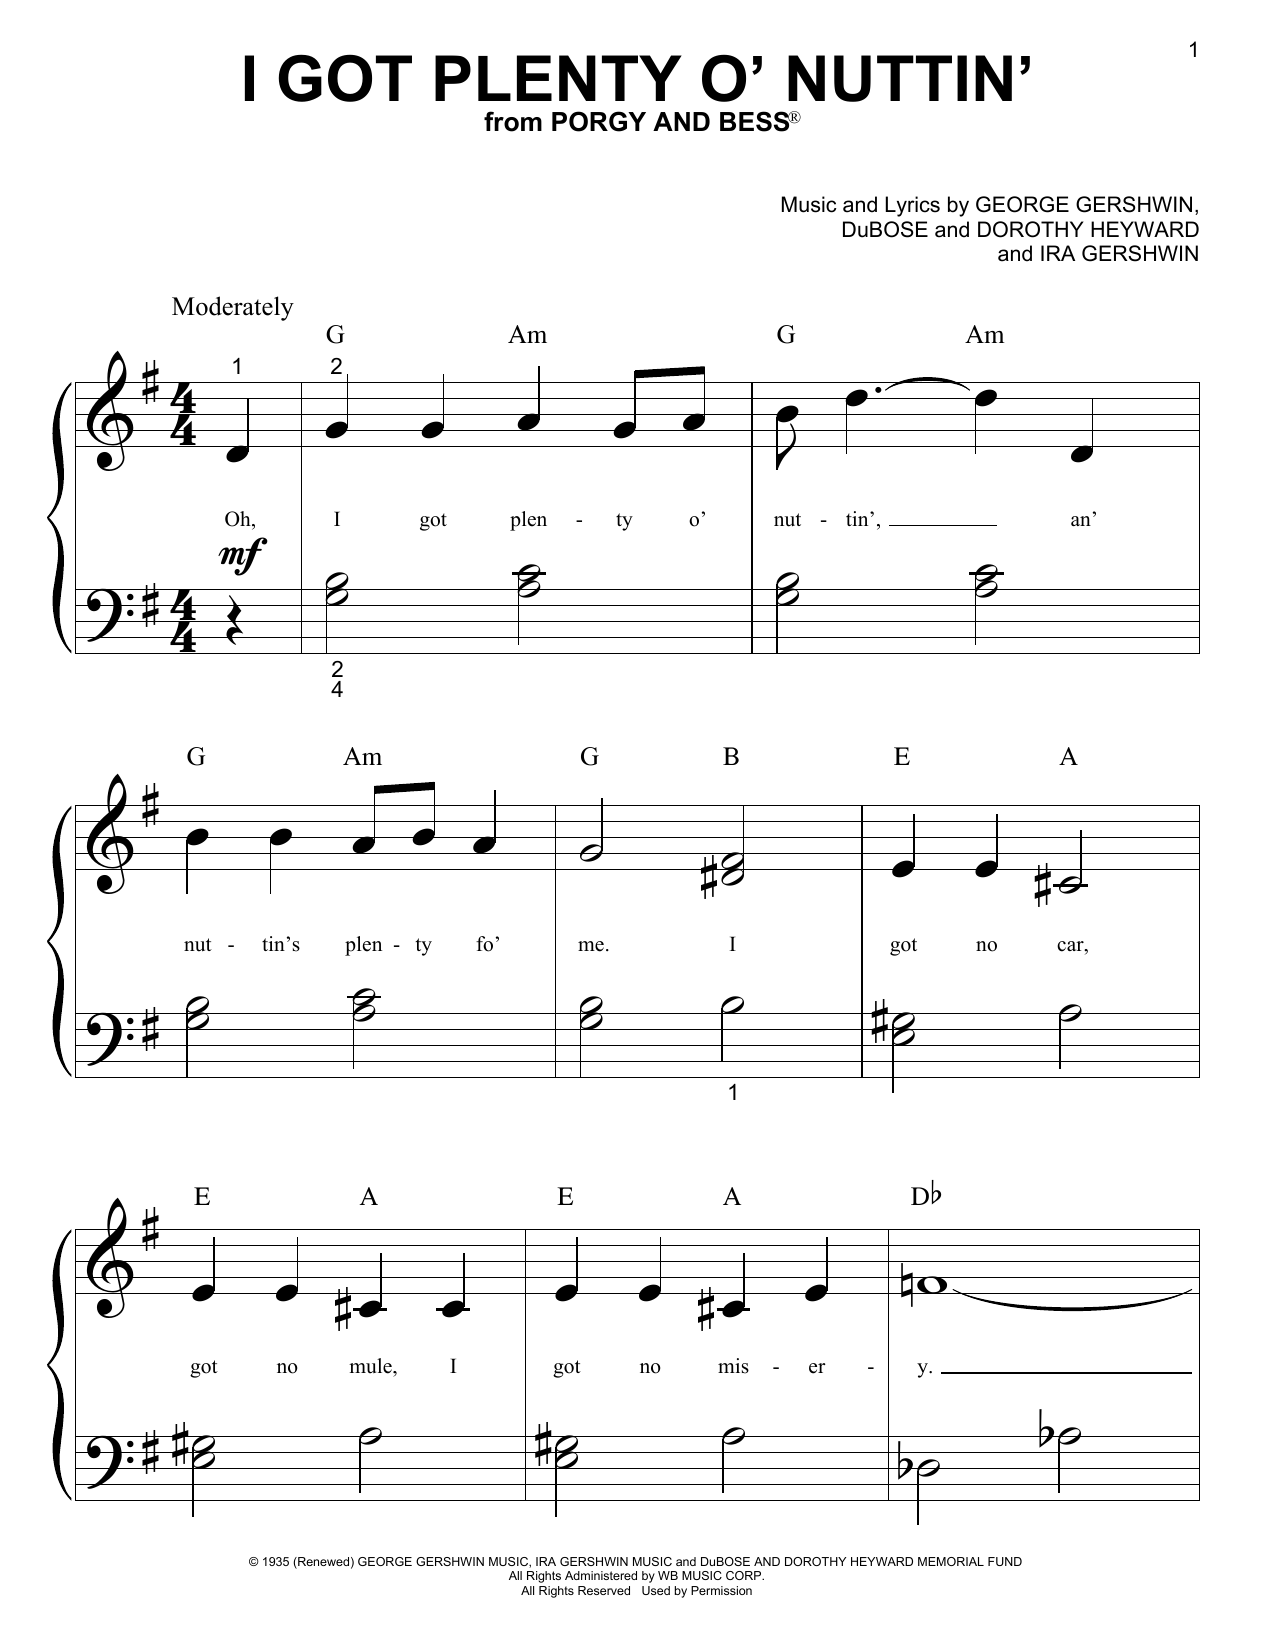 George Gershwin I Got Plenty O' Nuttin' Sheet Music Notes & Chords for Viola - Download or Print PDF